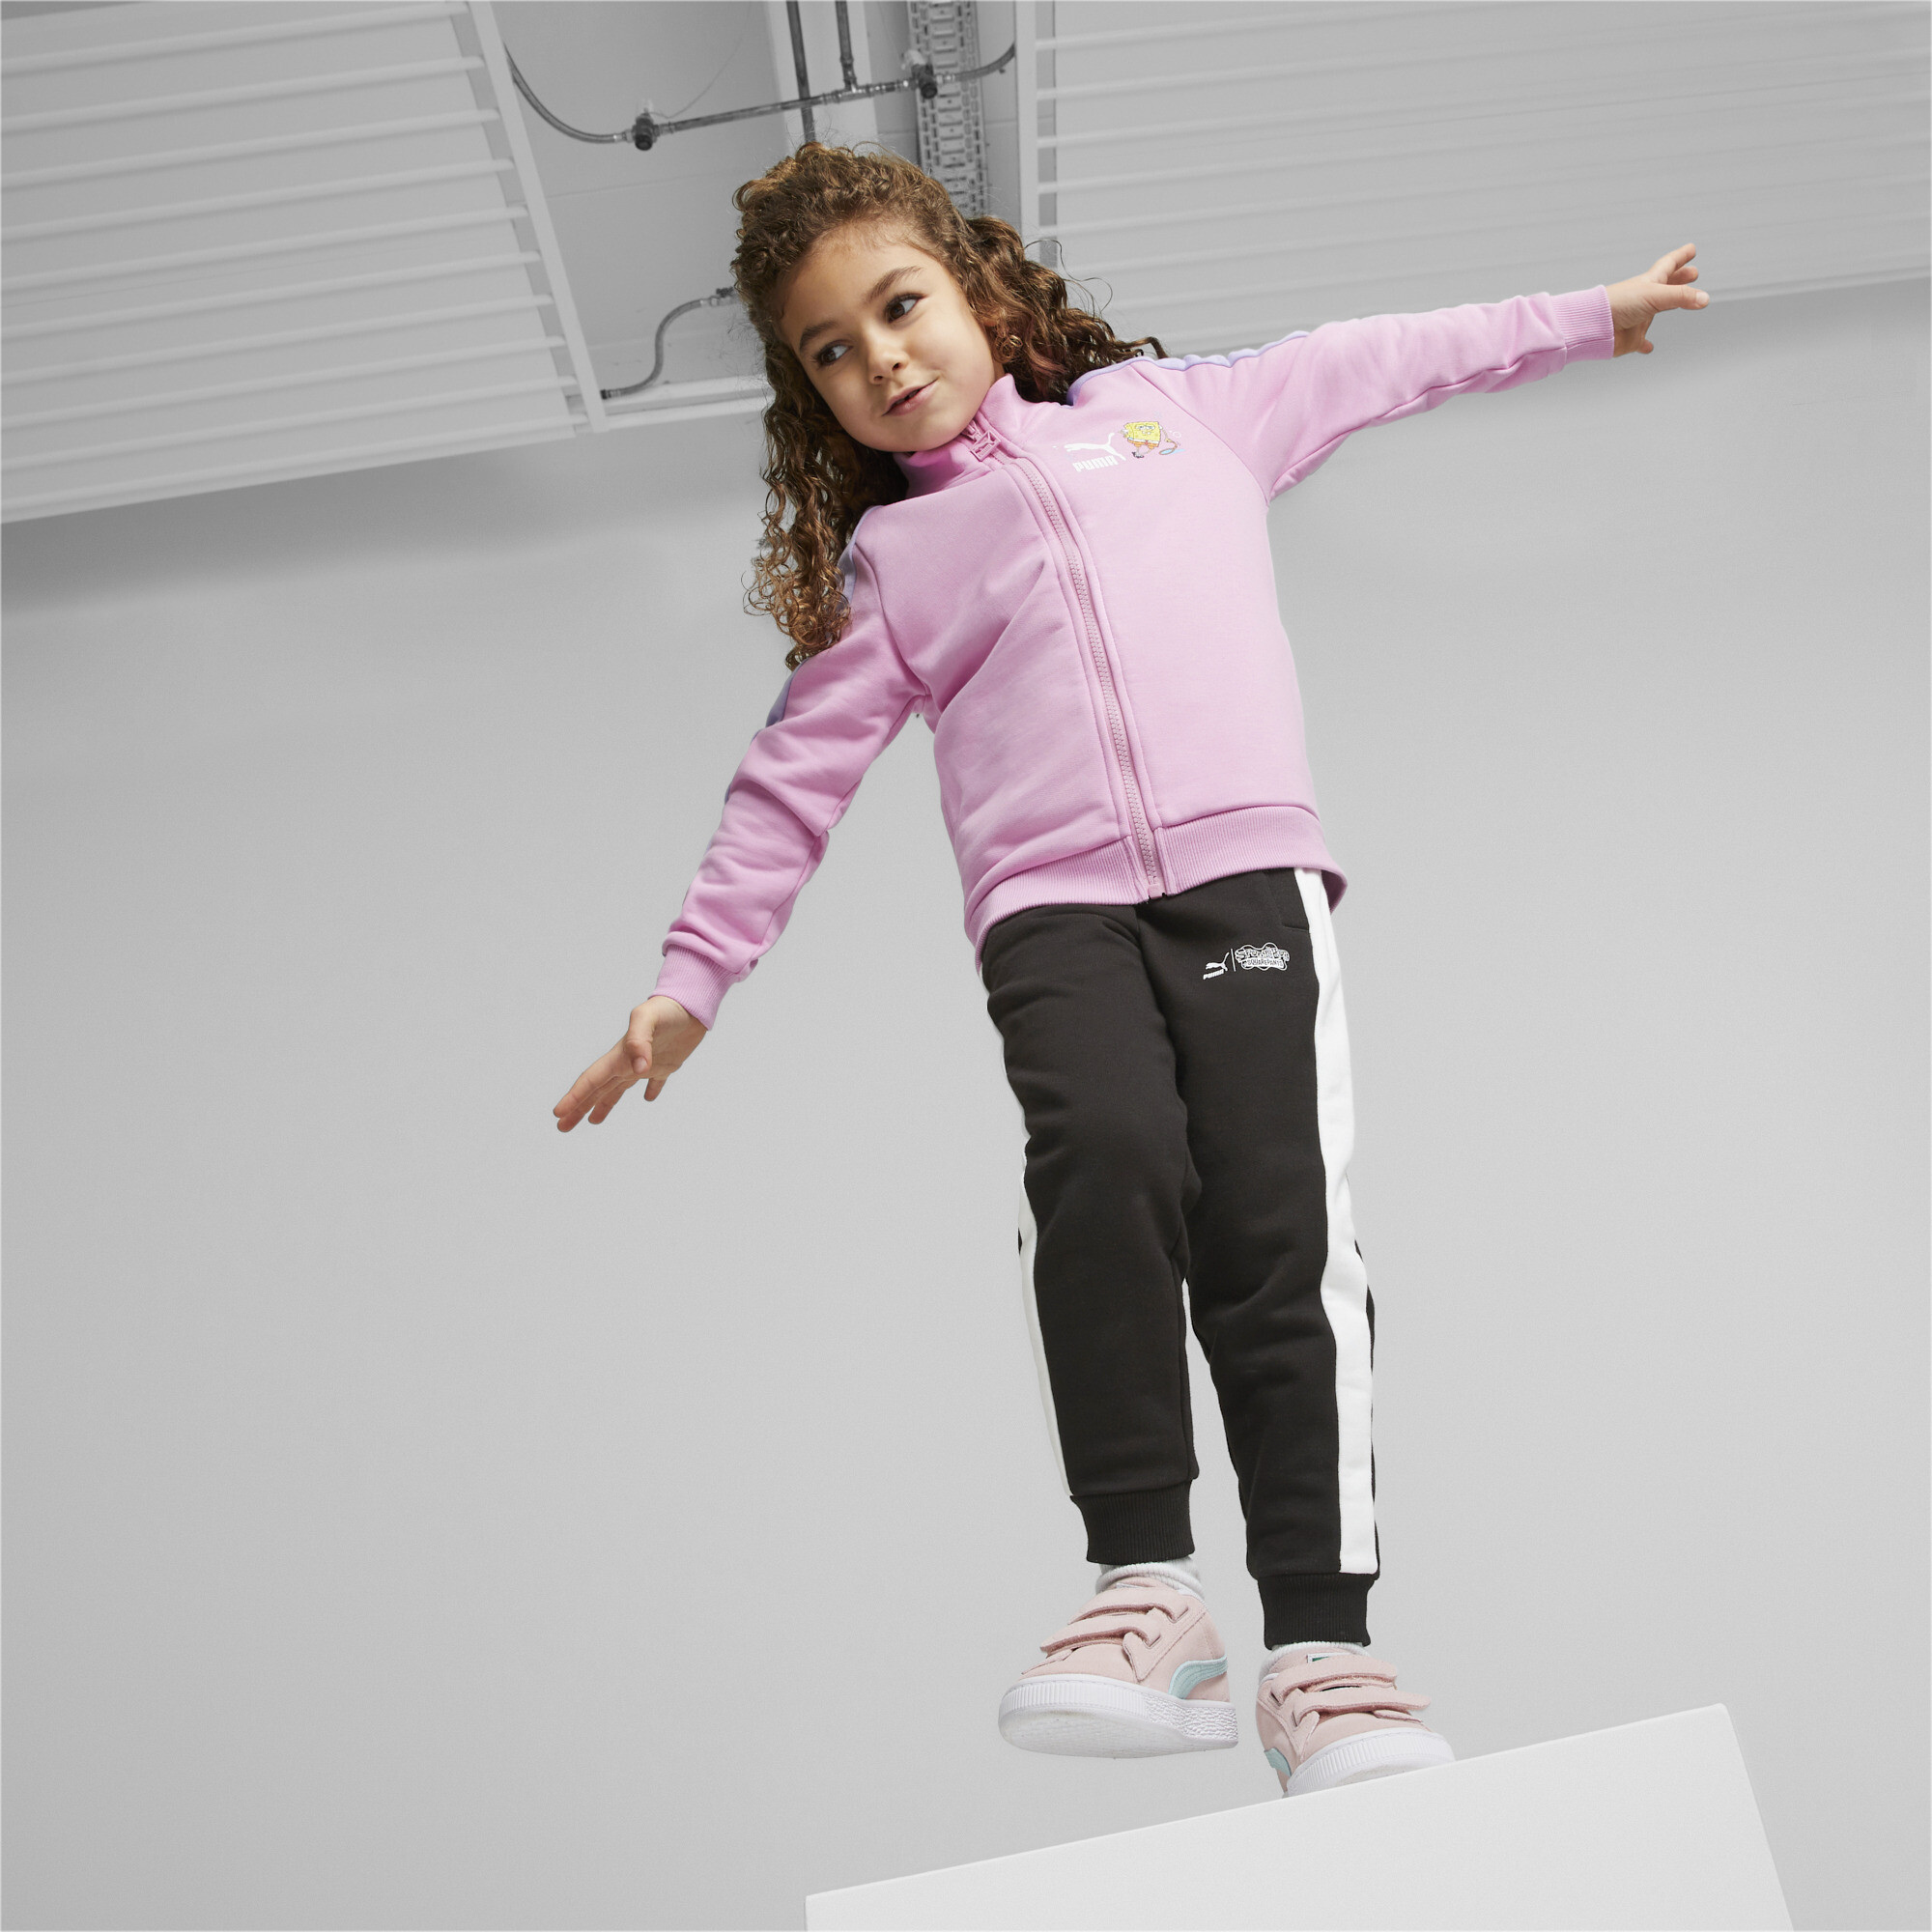 PUMA X SPONGEBOB T7 Jacket Kids In Pink, Size 11-12 Youth